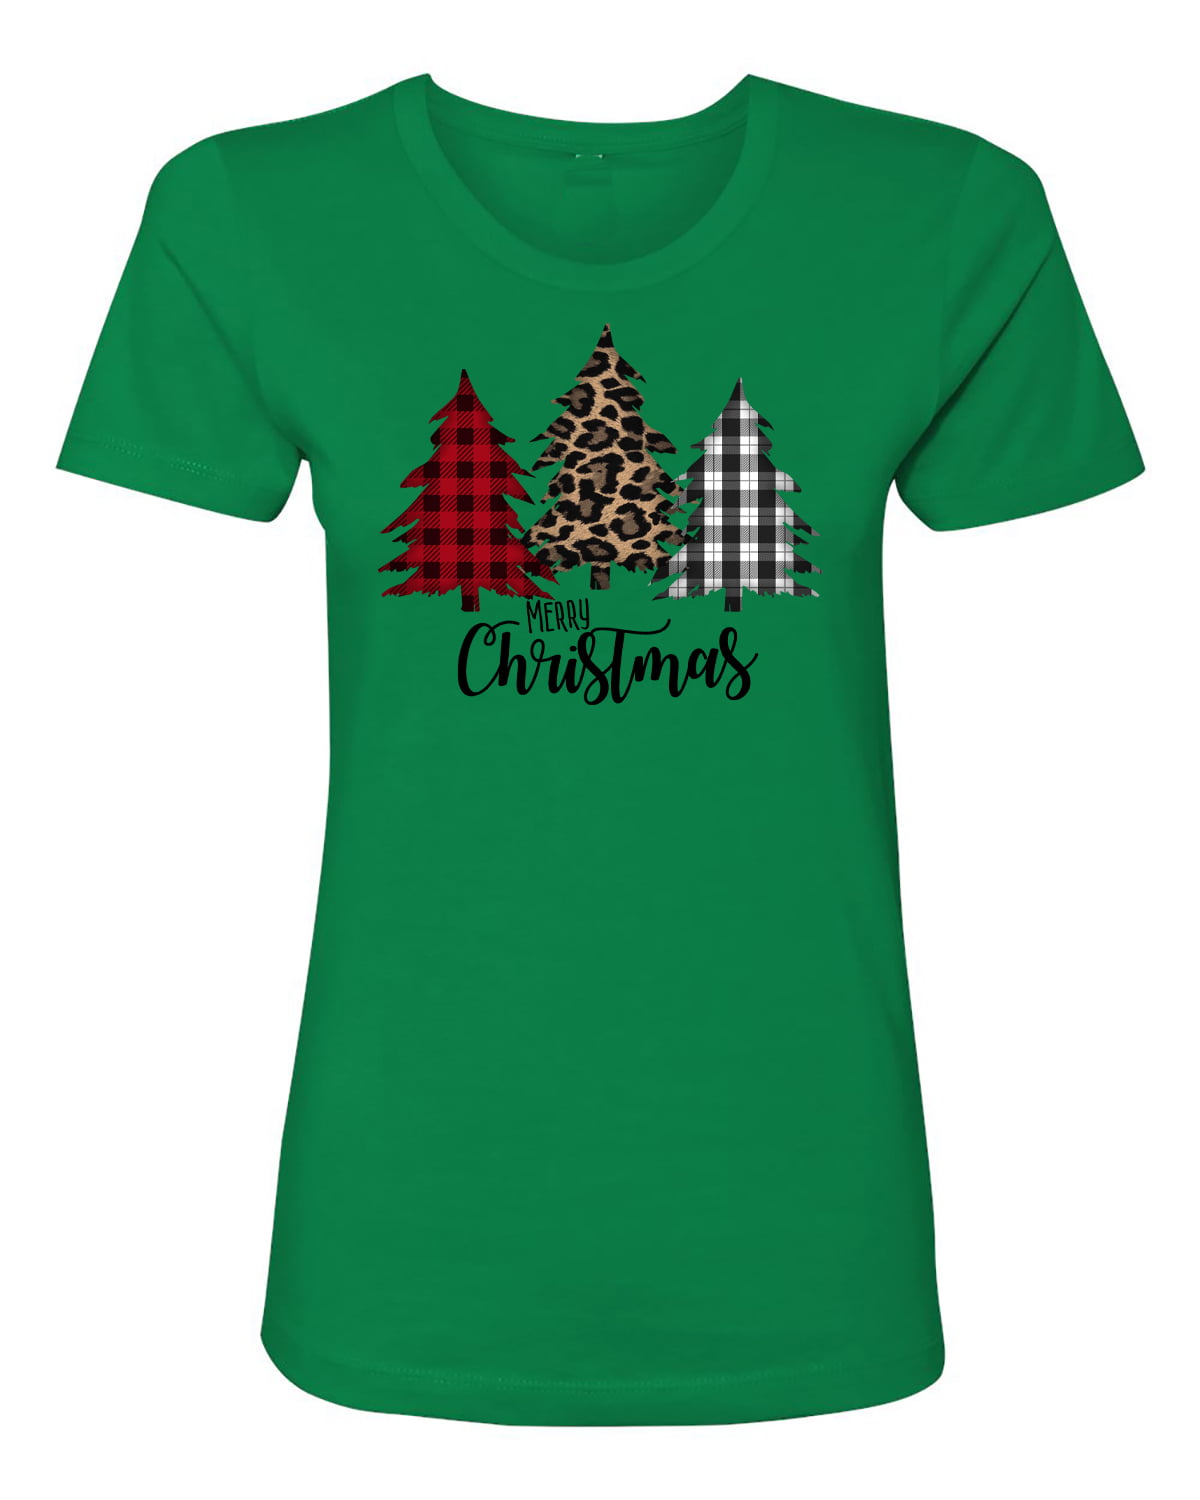 Womens Christmas shirt  leopard print tree shirt Santa unisex shirt   girls Christmas tree  Holiday Family Shirt  Holiday Shirt